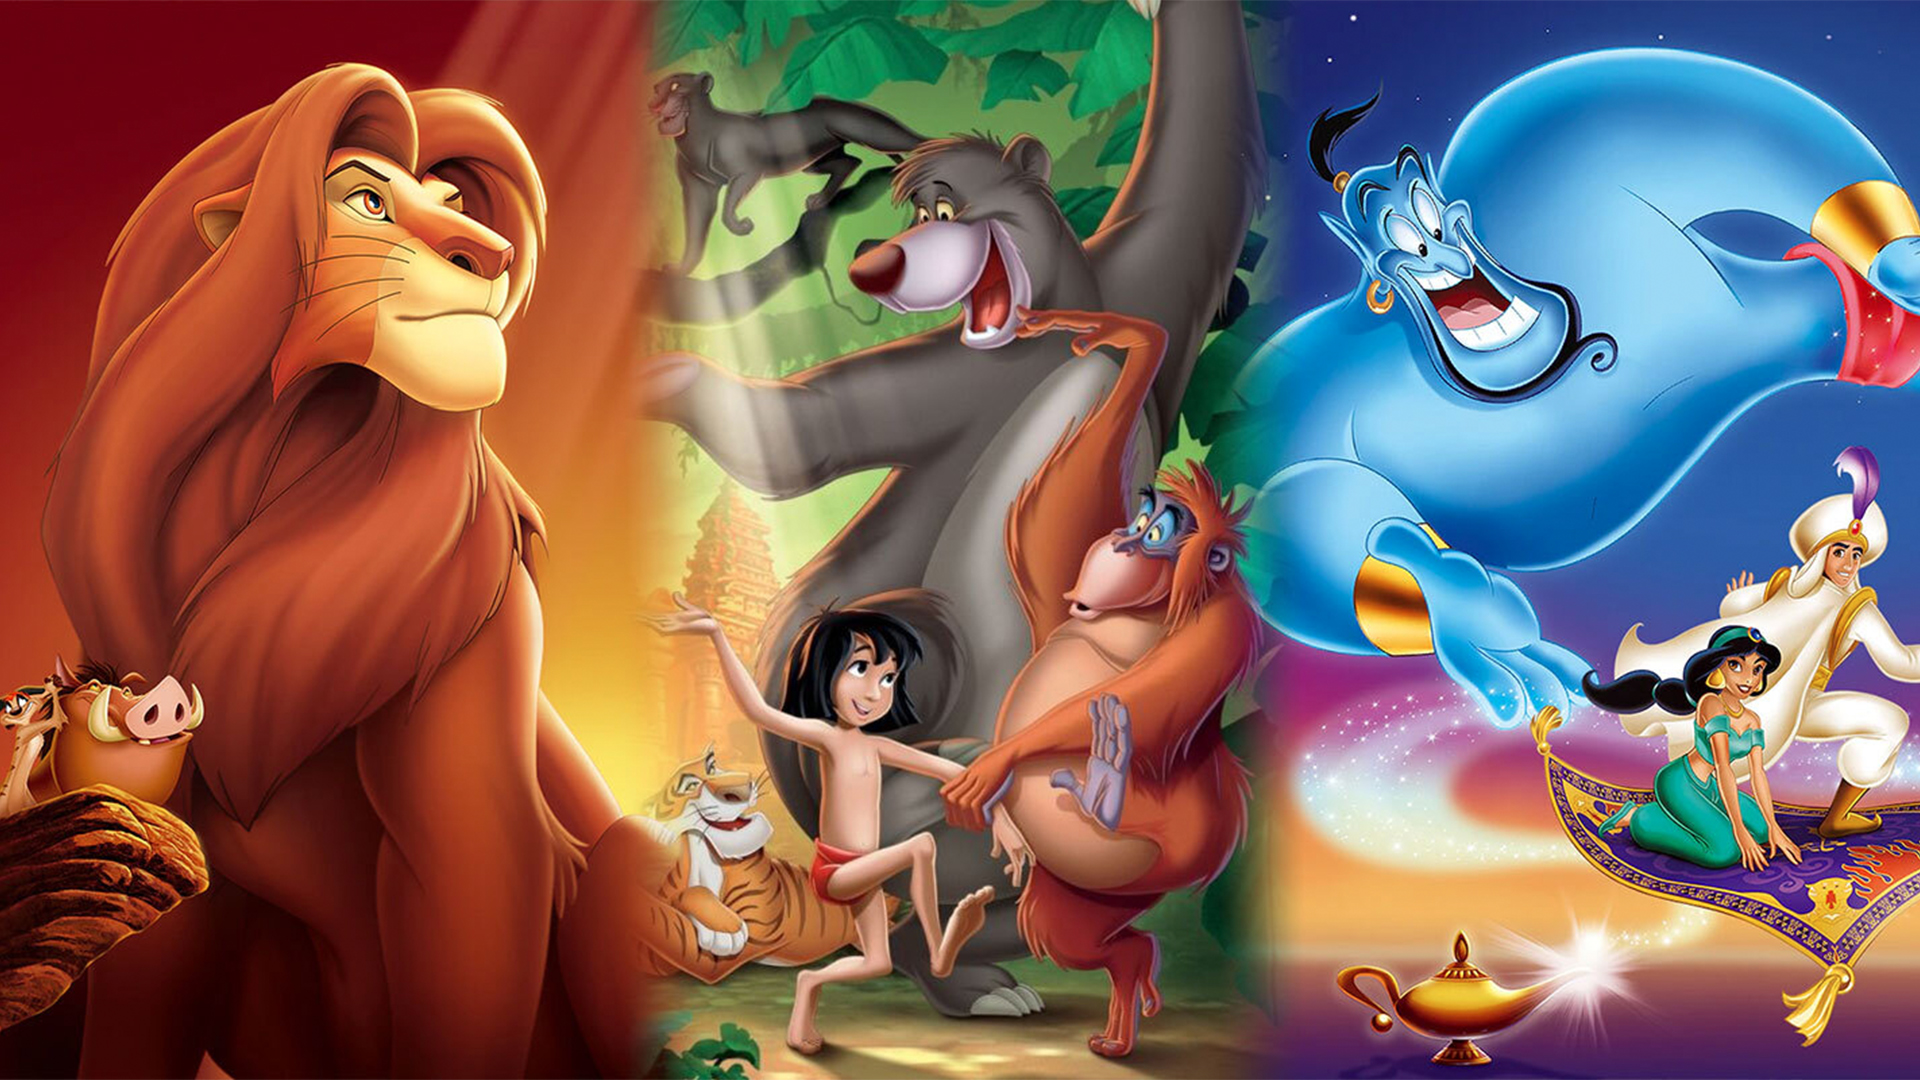 Дисней 4 буквы. Король Лев и алладин. Aladdin and the Lion King ps4. Disney Classic games: Aladdin and the Lion King. The Jungle book, Aladdin & the Lion King для Nintendo Switch.